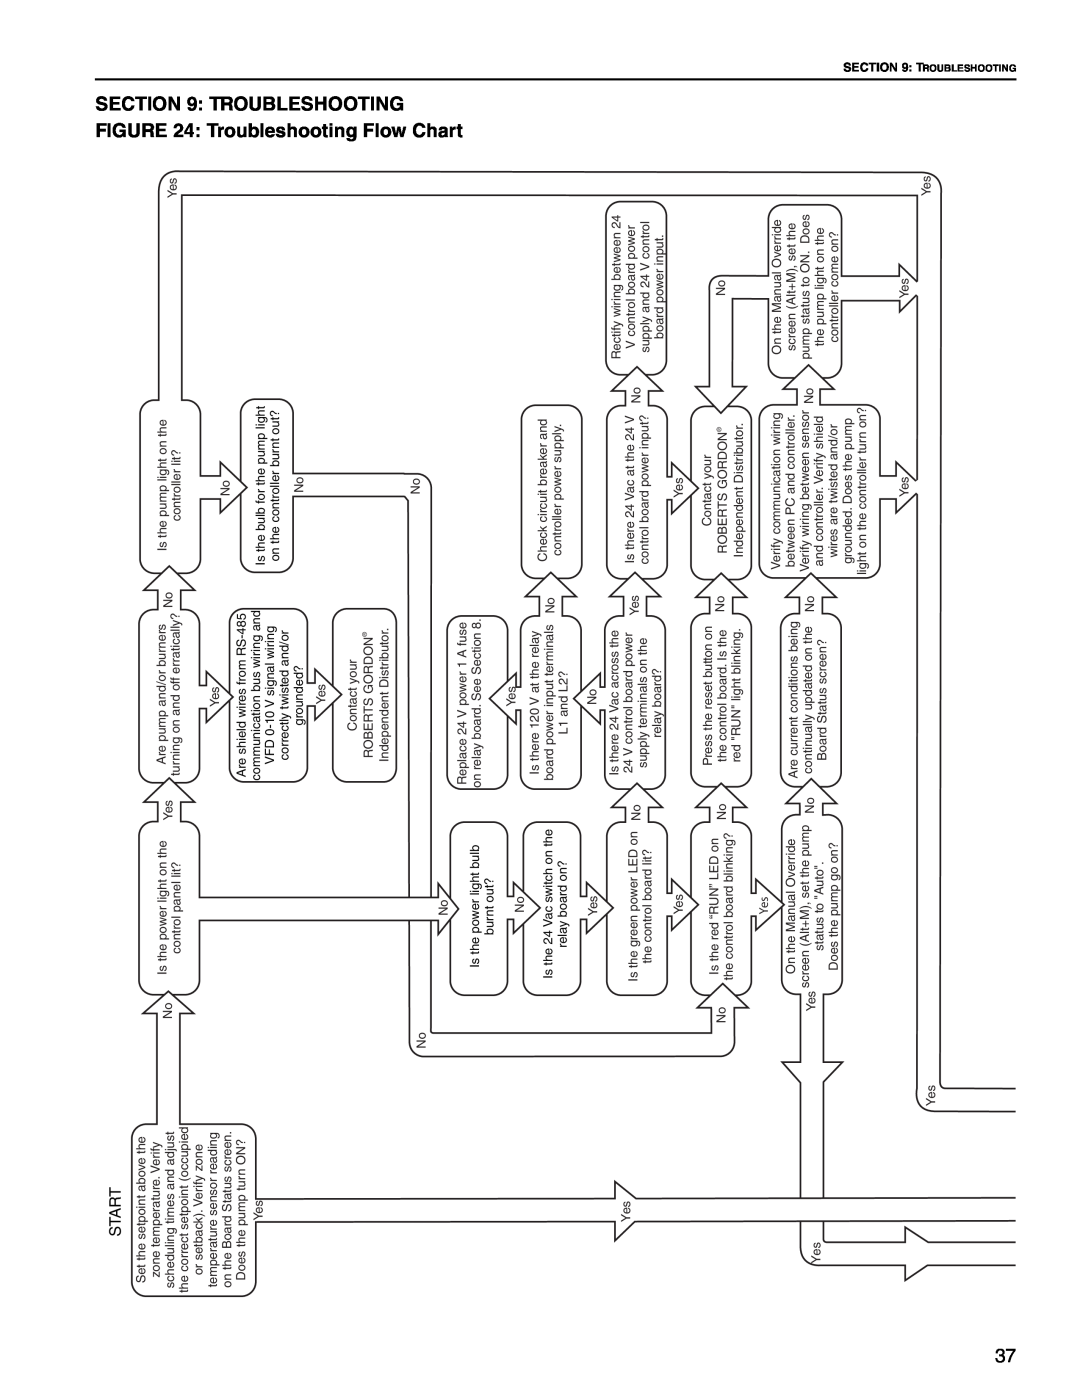 Roberts Gorden NEMA 4 installation manual Chart, Section, Troubleshooting 